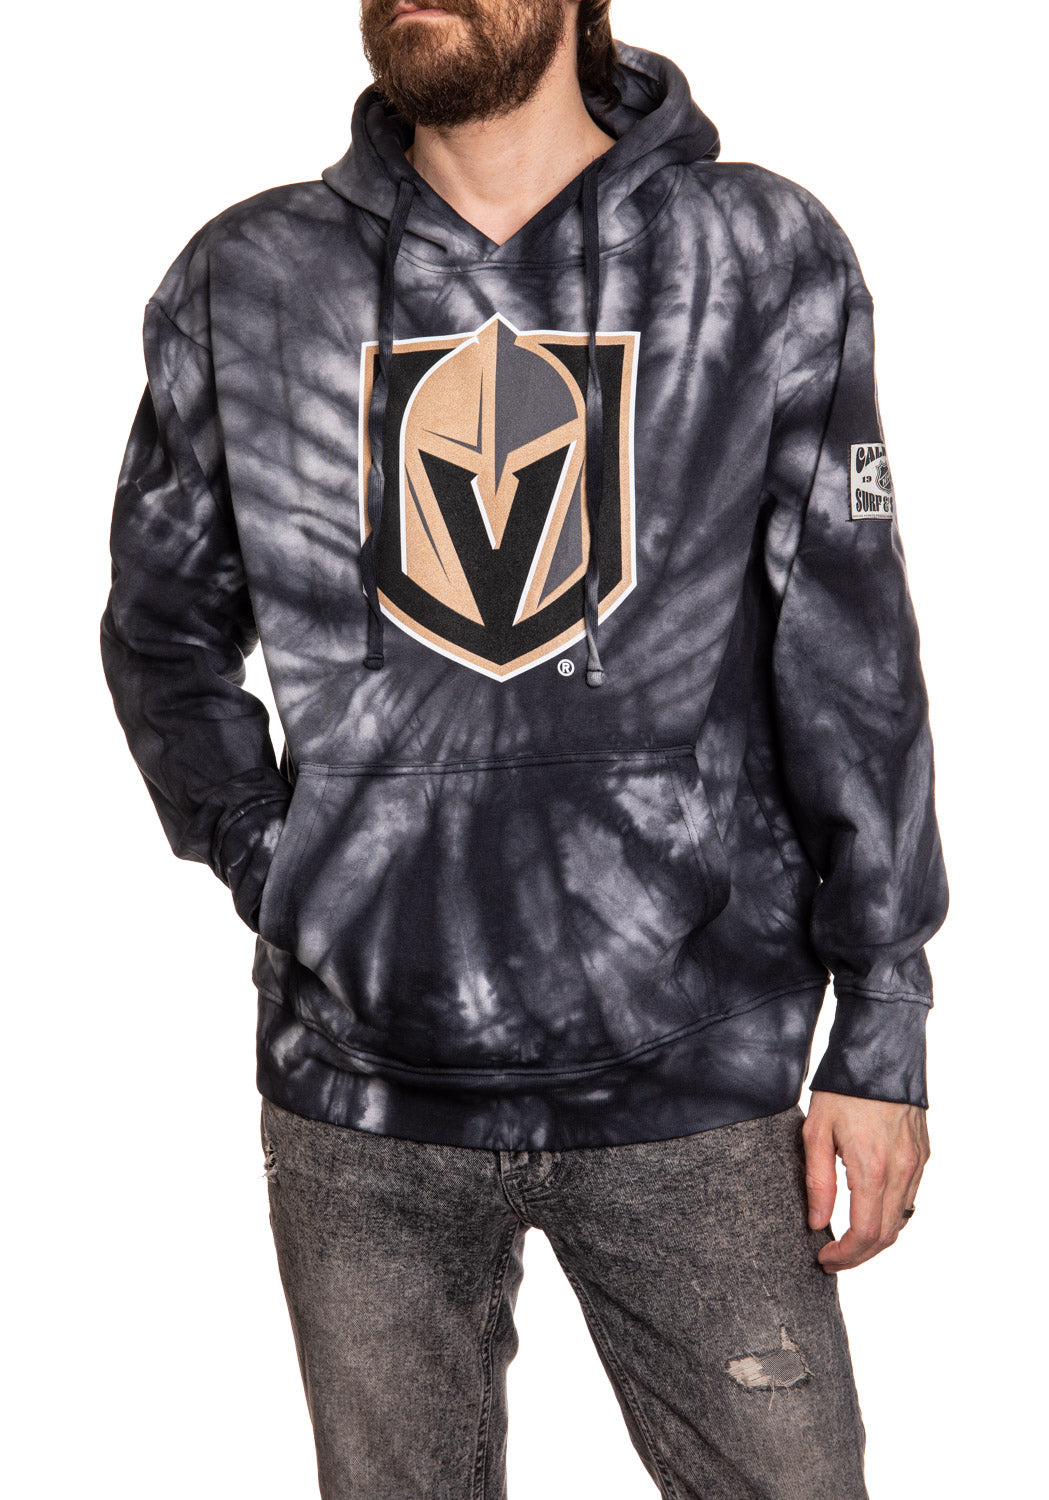 Official NHL licensed Vegas Golden Knights Spiral Tie Dye hoodie